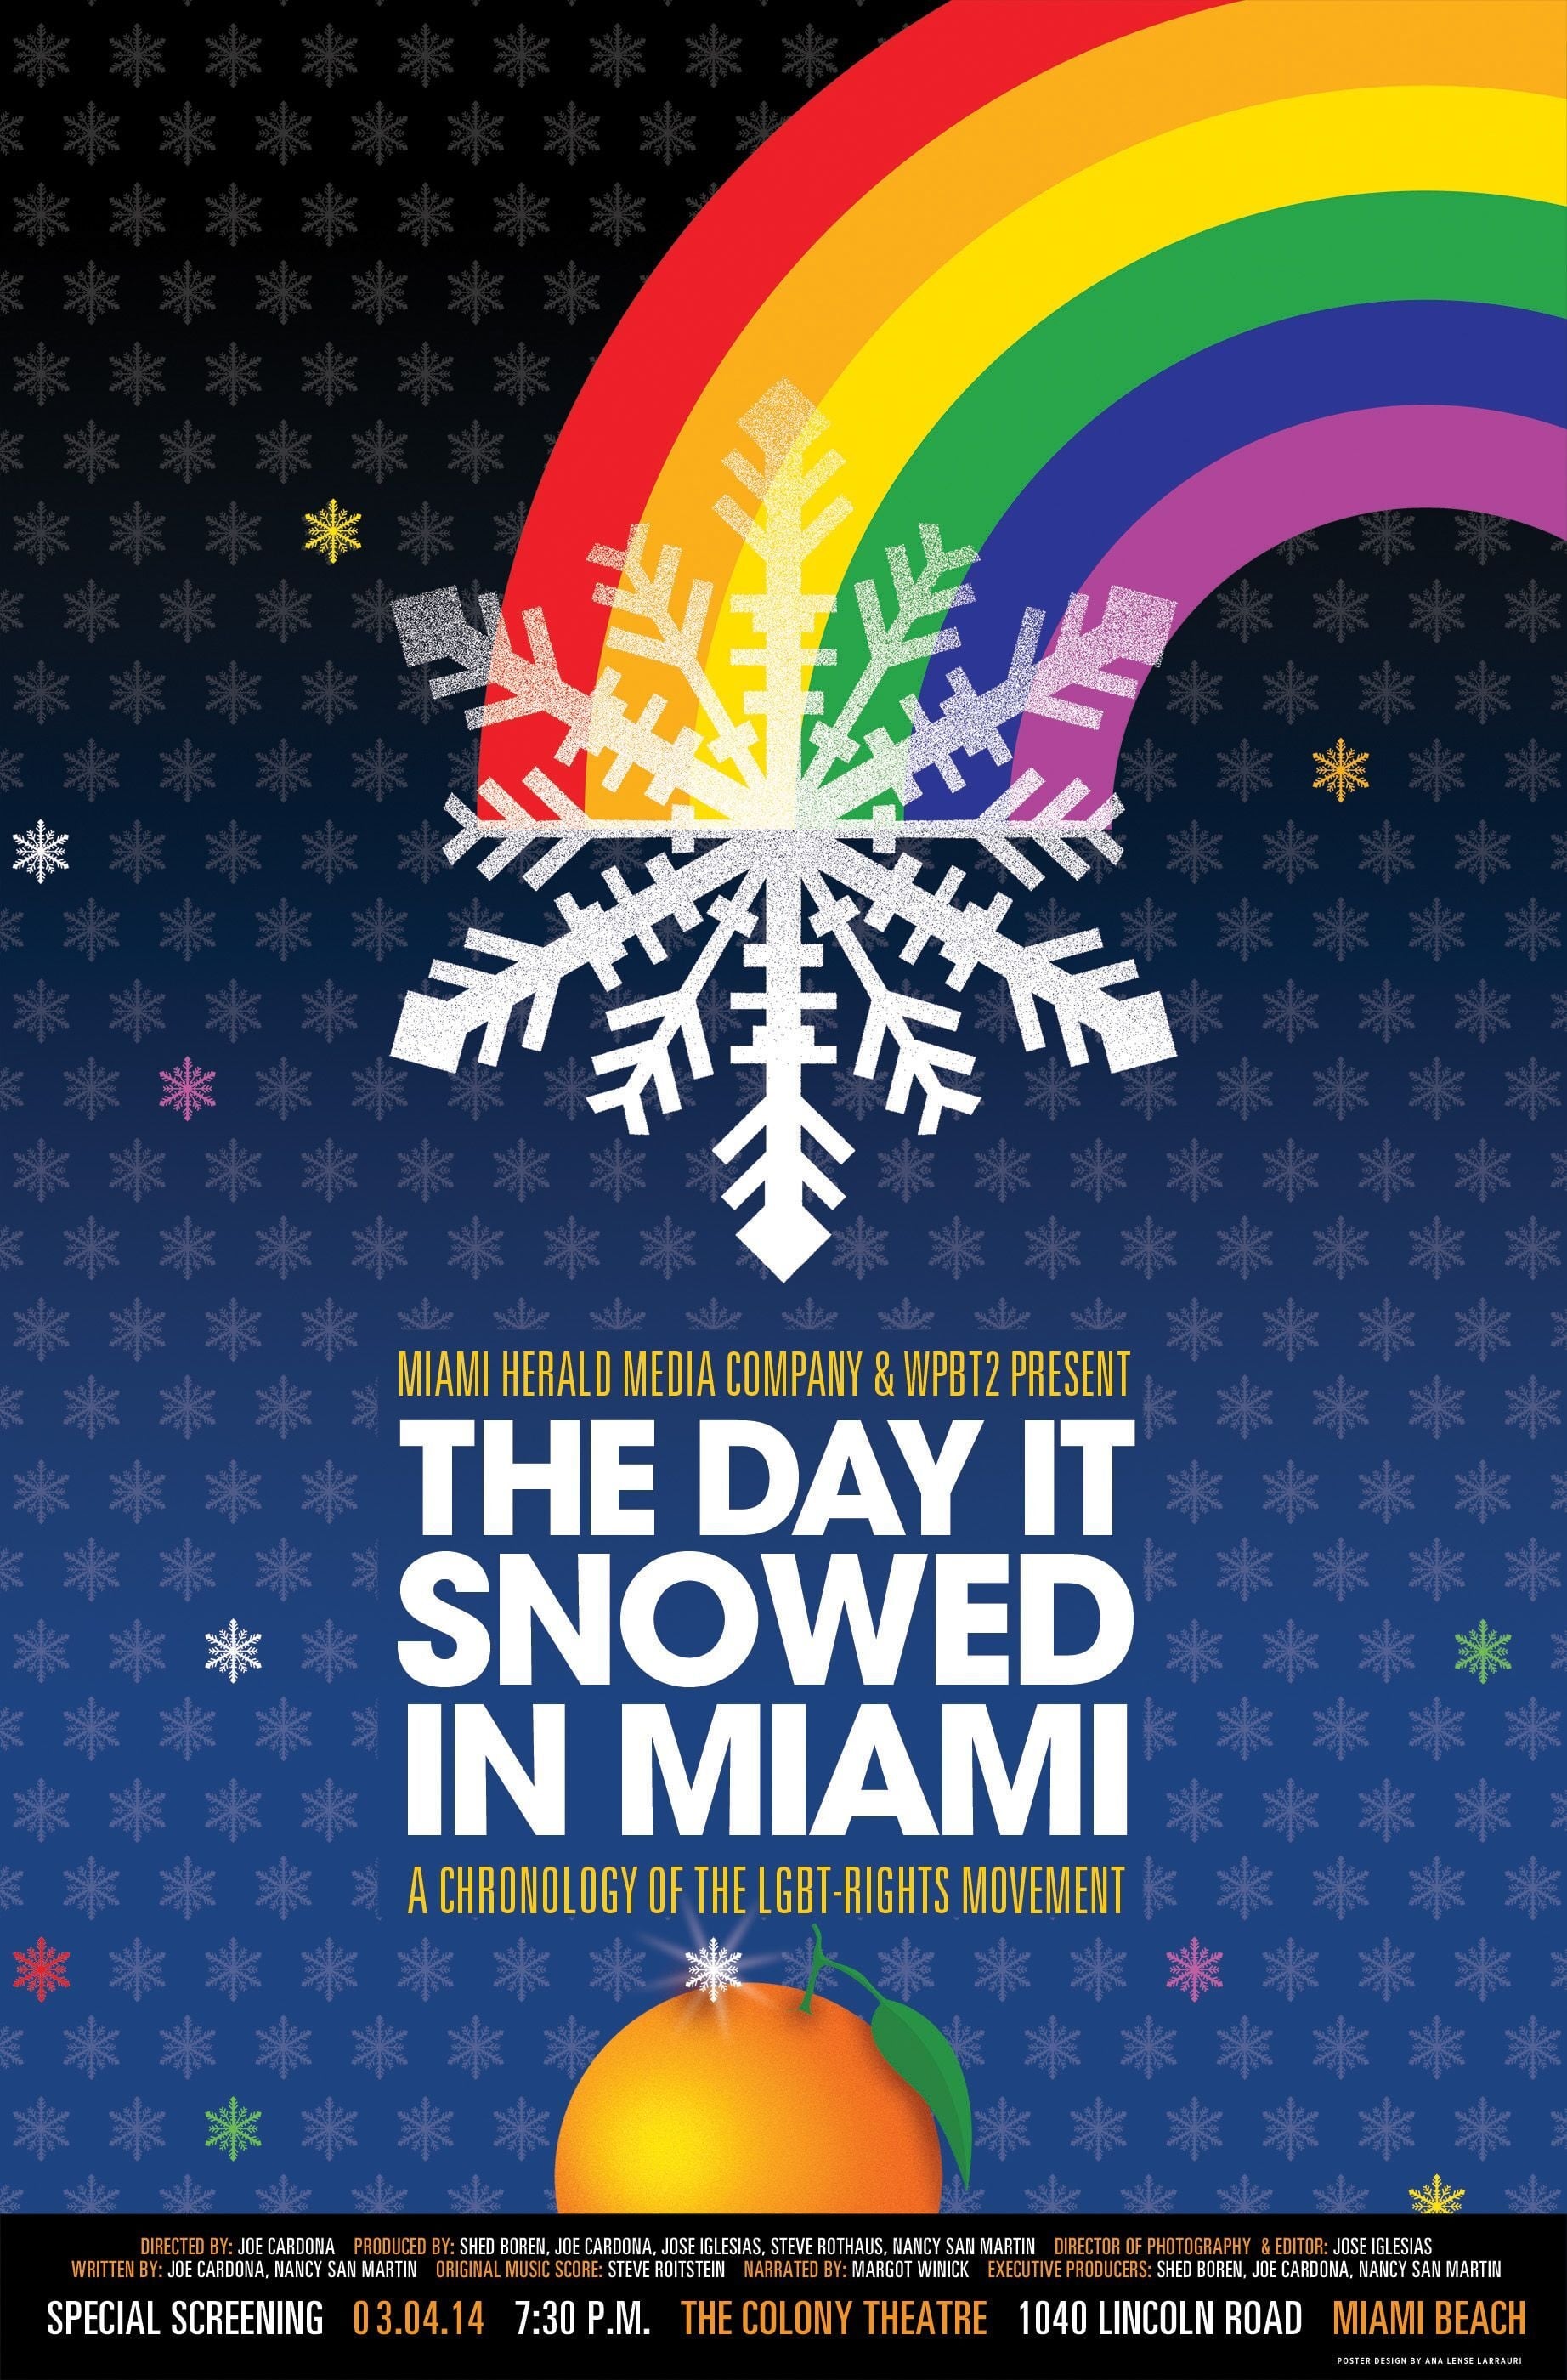 The Day it Snowed in Miami